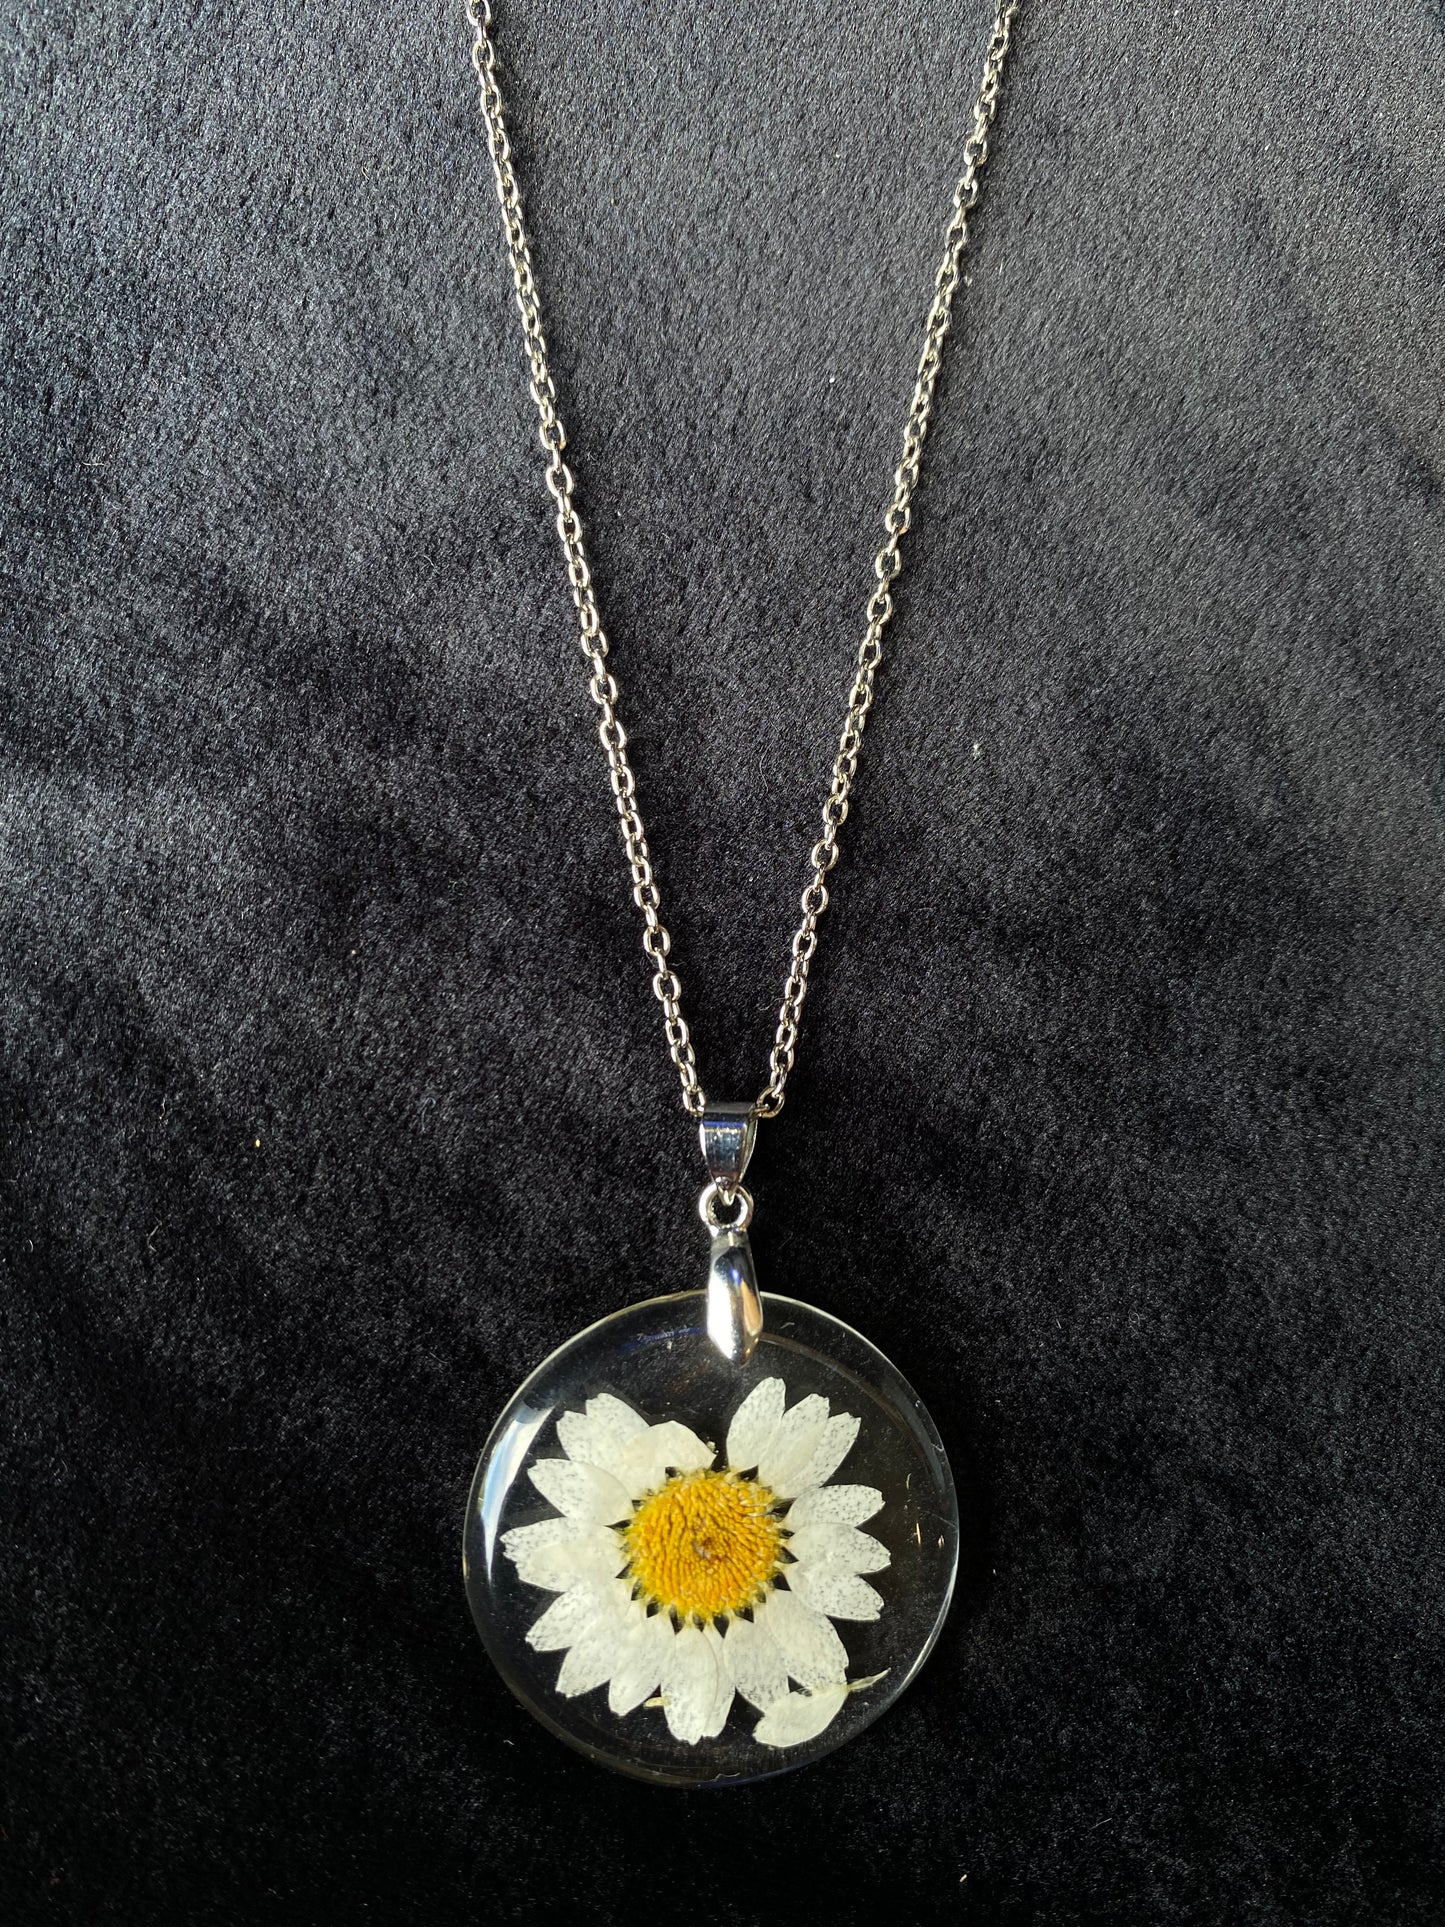 Resin daisy necklace